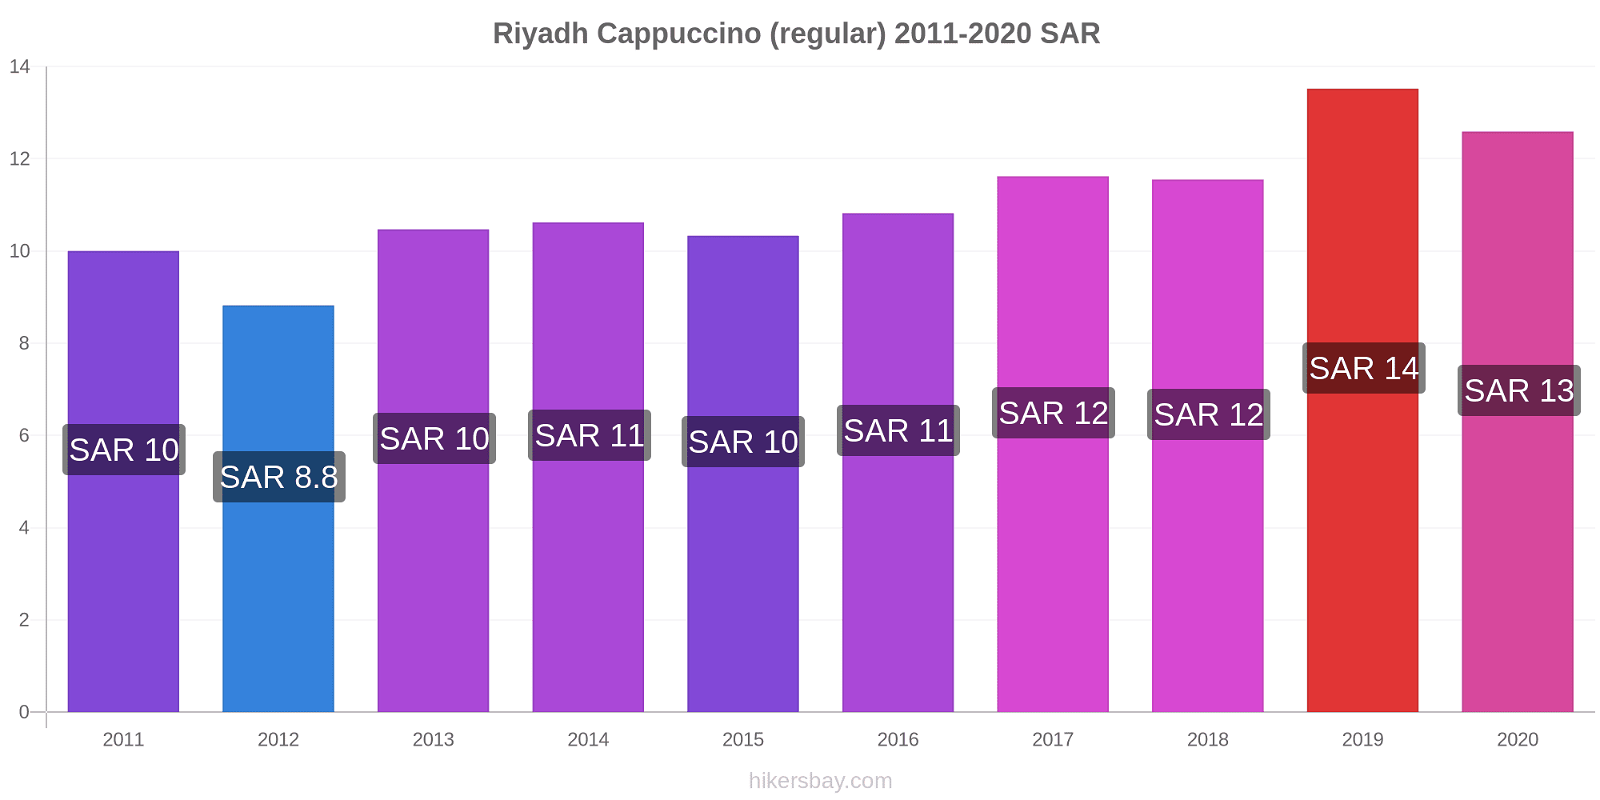 Riyadh price changes Cappuccino (regular) hikersbay.com